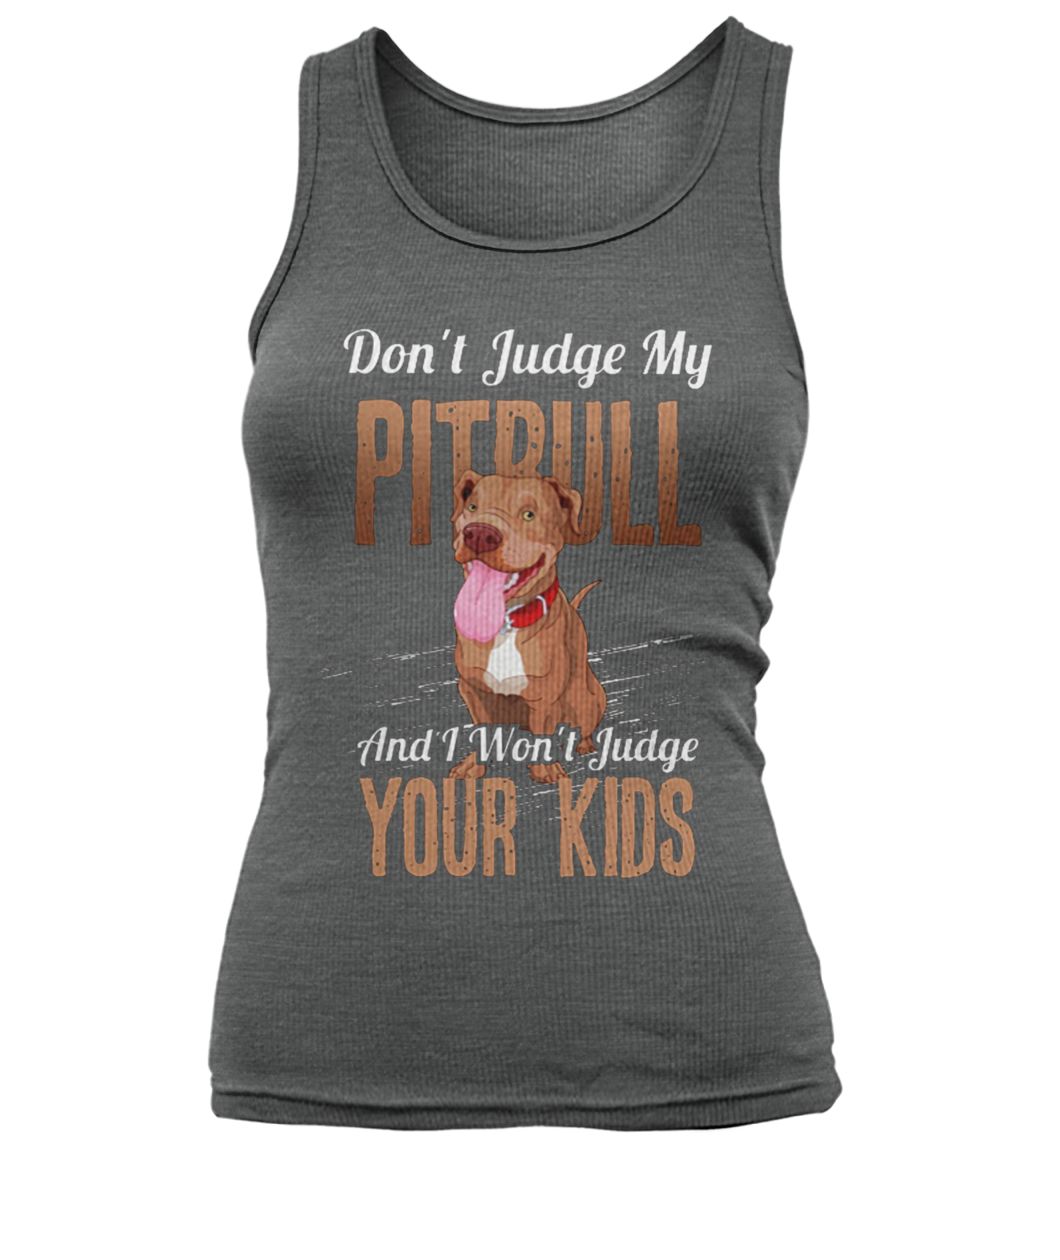 Don't judge my pitbull and I won't judge your kids women's tank top